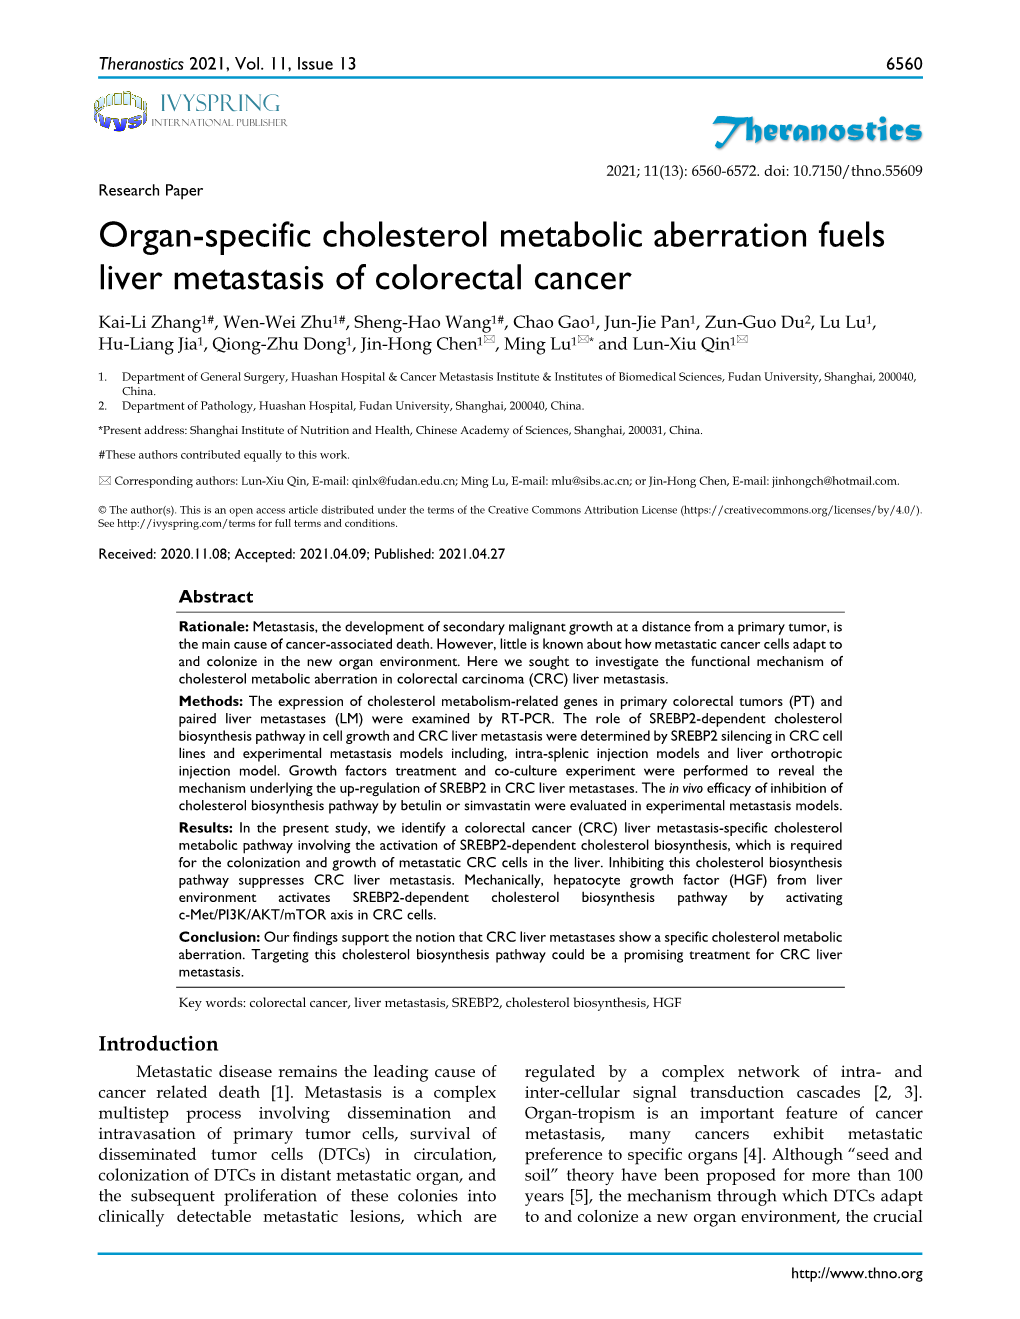 Theranostics Organ-Specific Cholesterol Metabolic Aberration